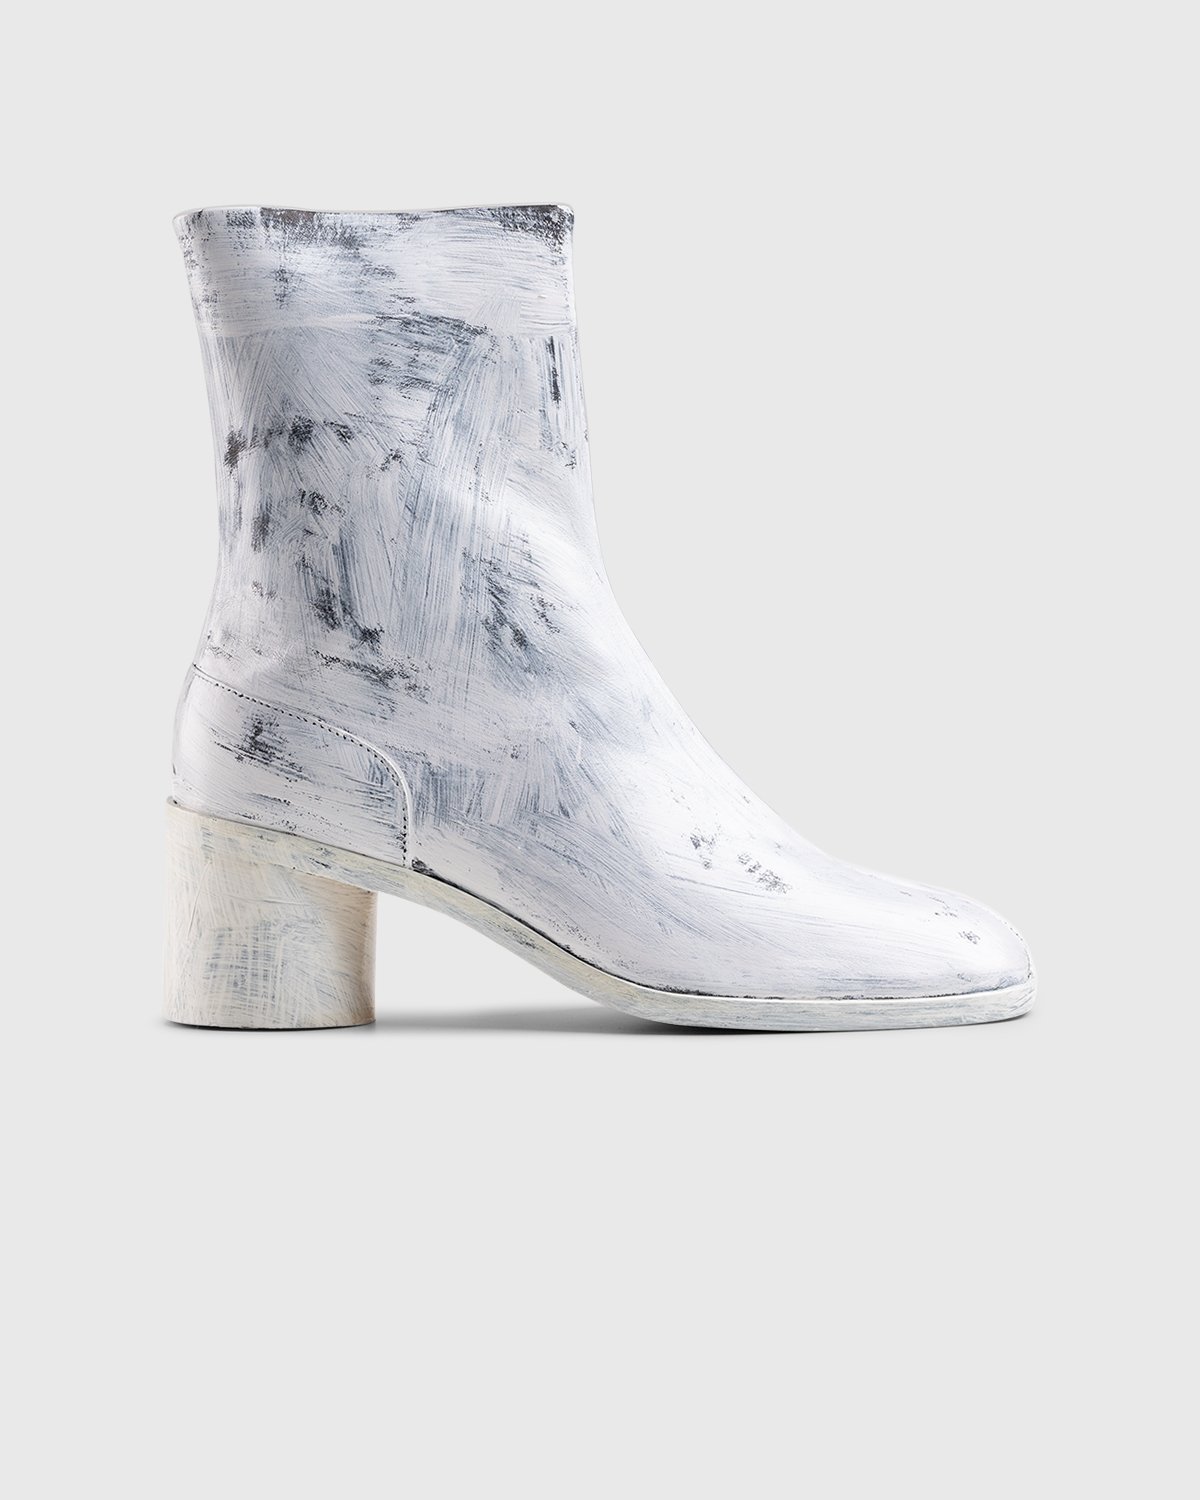 Maison Margiela - Tabi Bianchetto Chelsea Boots White - Footwear - White - Image 1